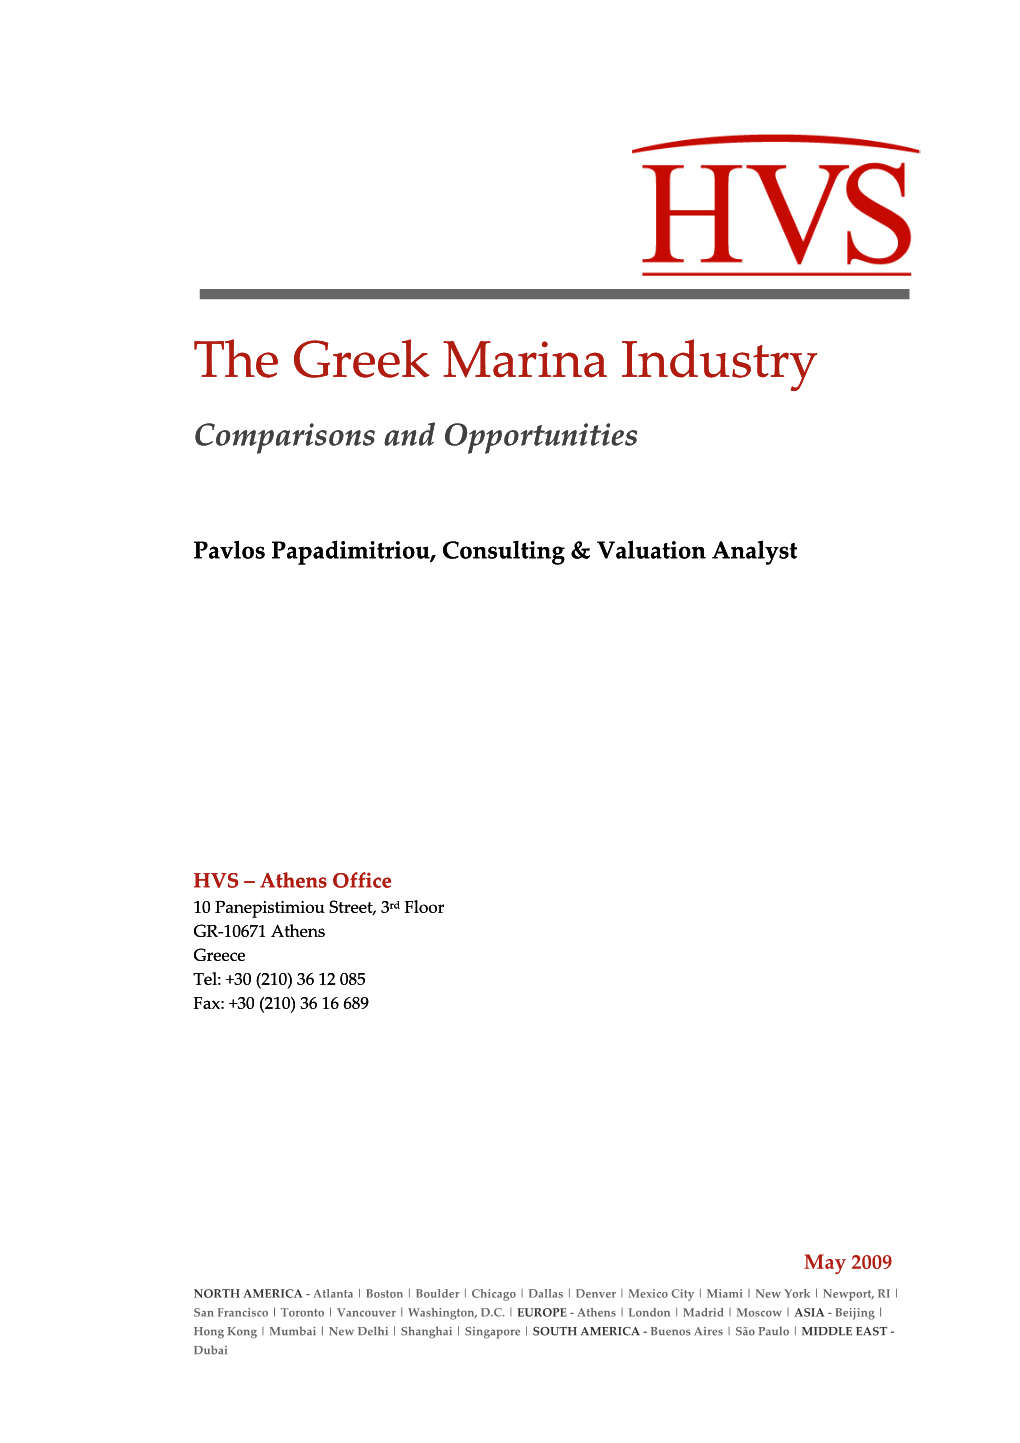 The Greek Marina Industry